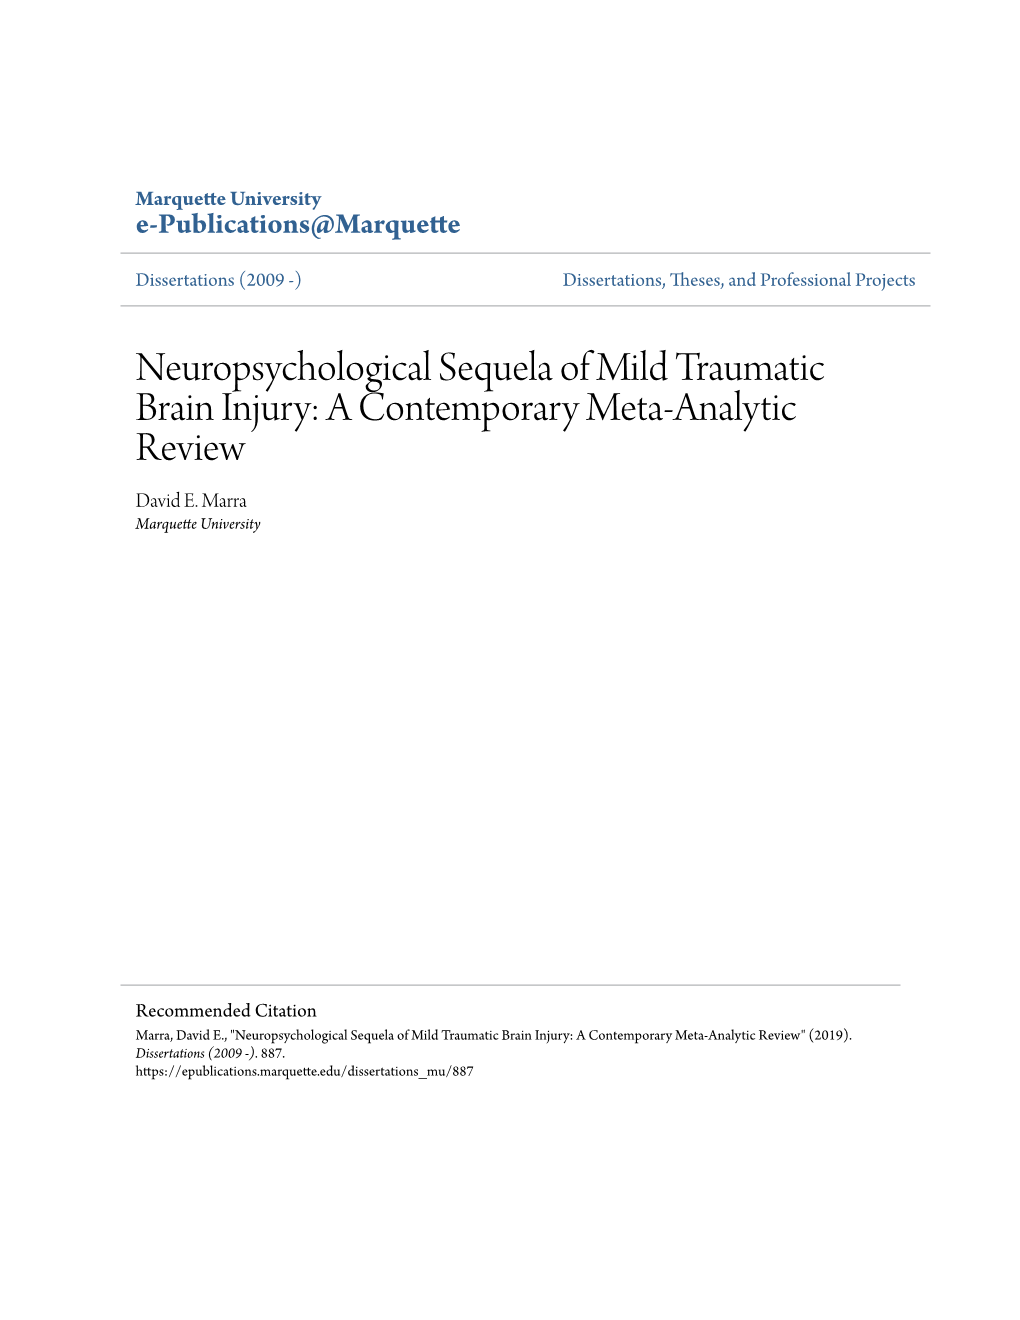 Neuropsychological Sequela of Mild Traumatic Brain Injury: a Contemporary Meta-Analytic Review David E